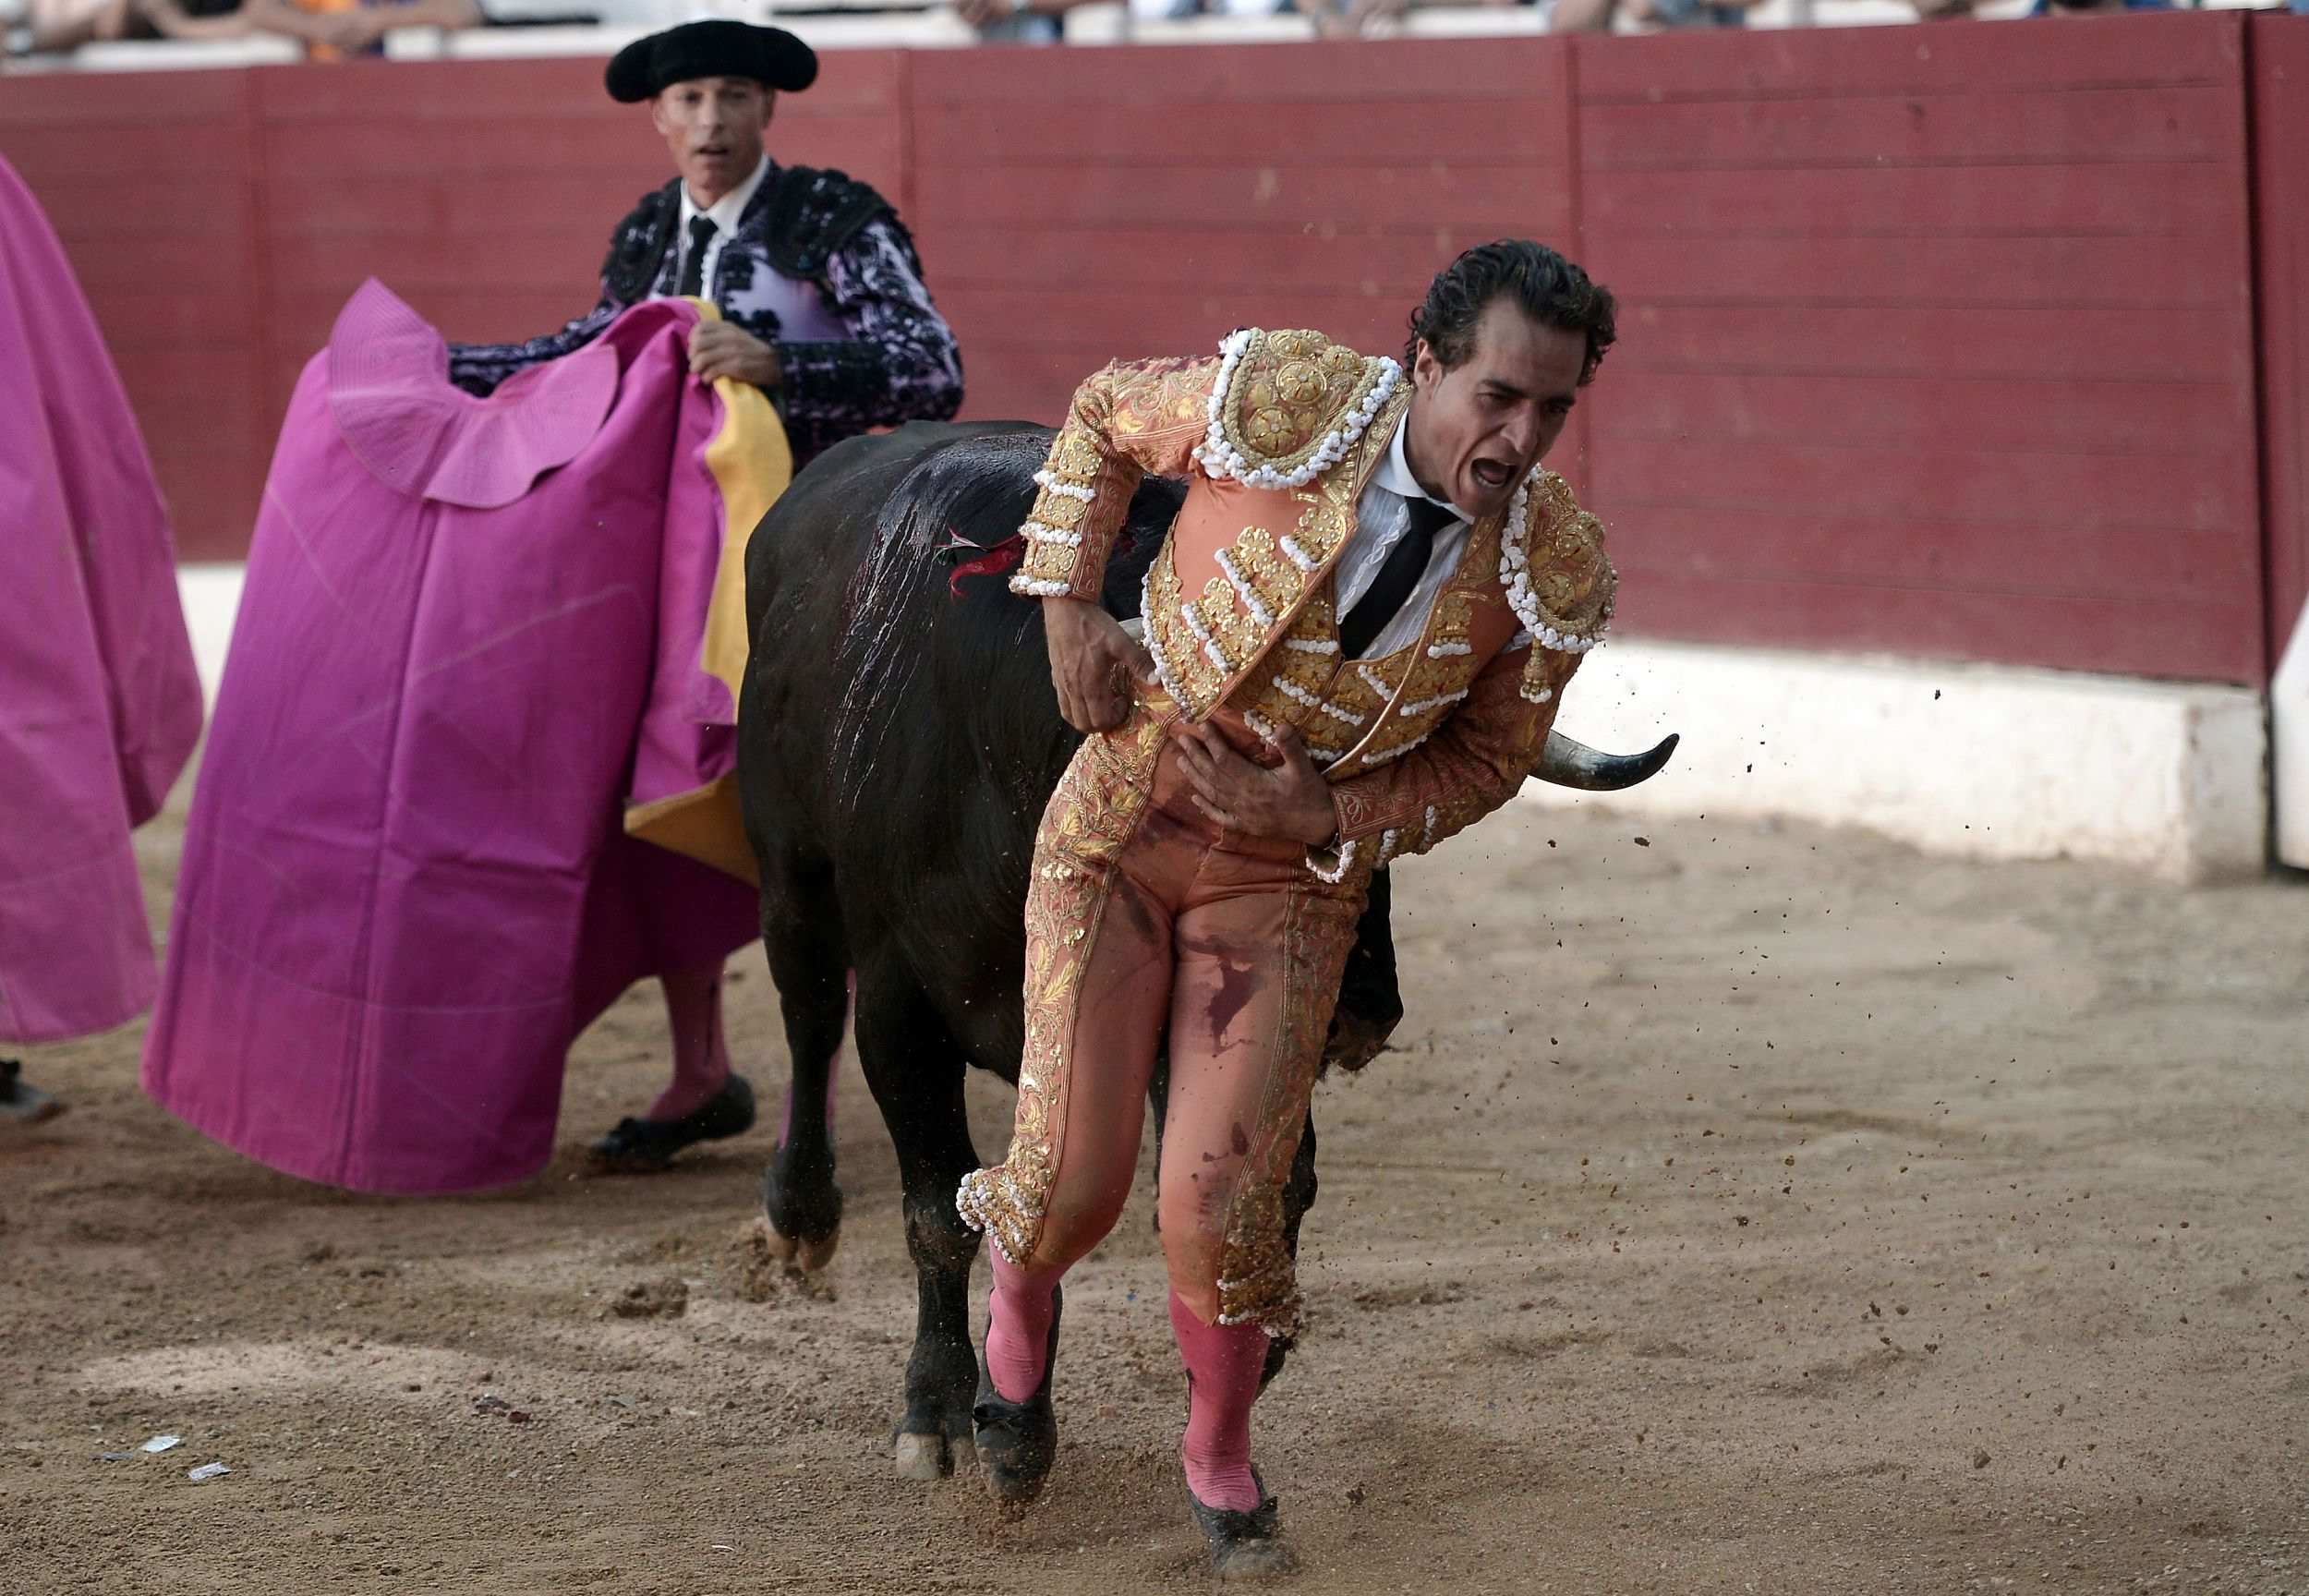 Is the art of bullfighting dead?, Art and design